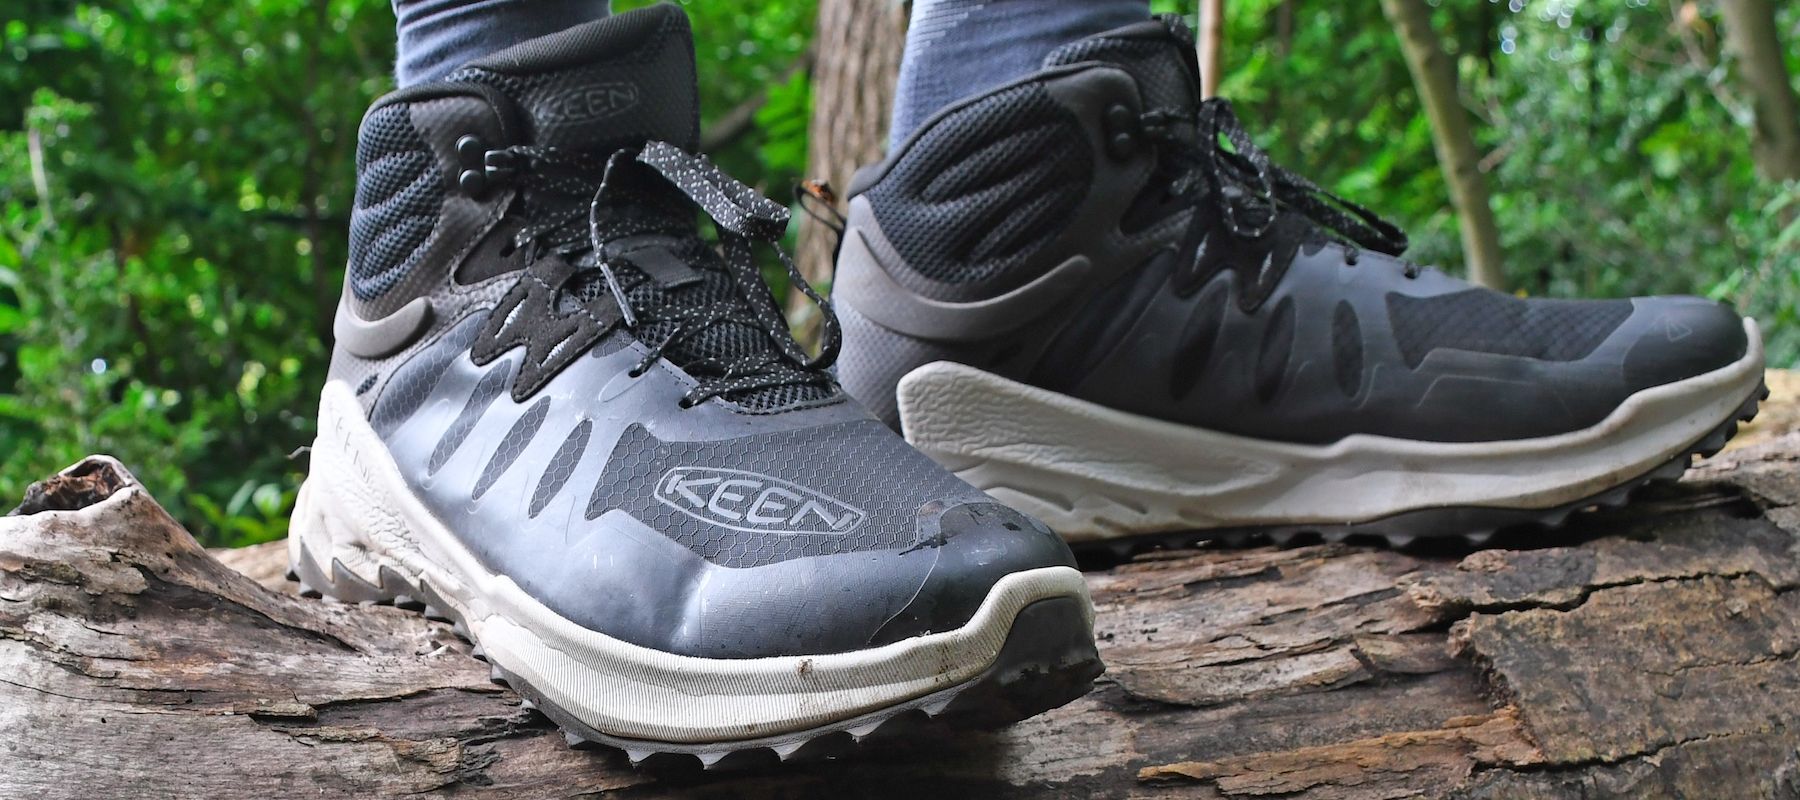 KEEN Zionic Waterproof Hiking Boots review: speedy hikers | Advnture